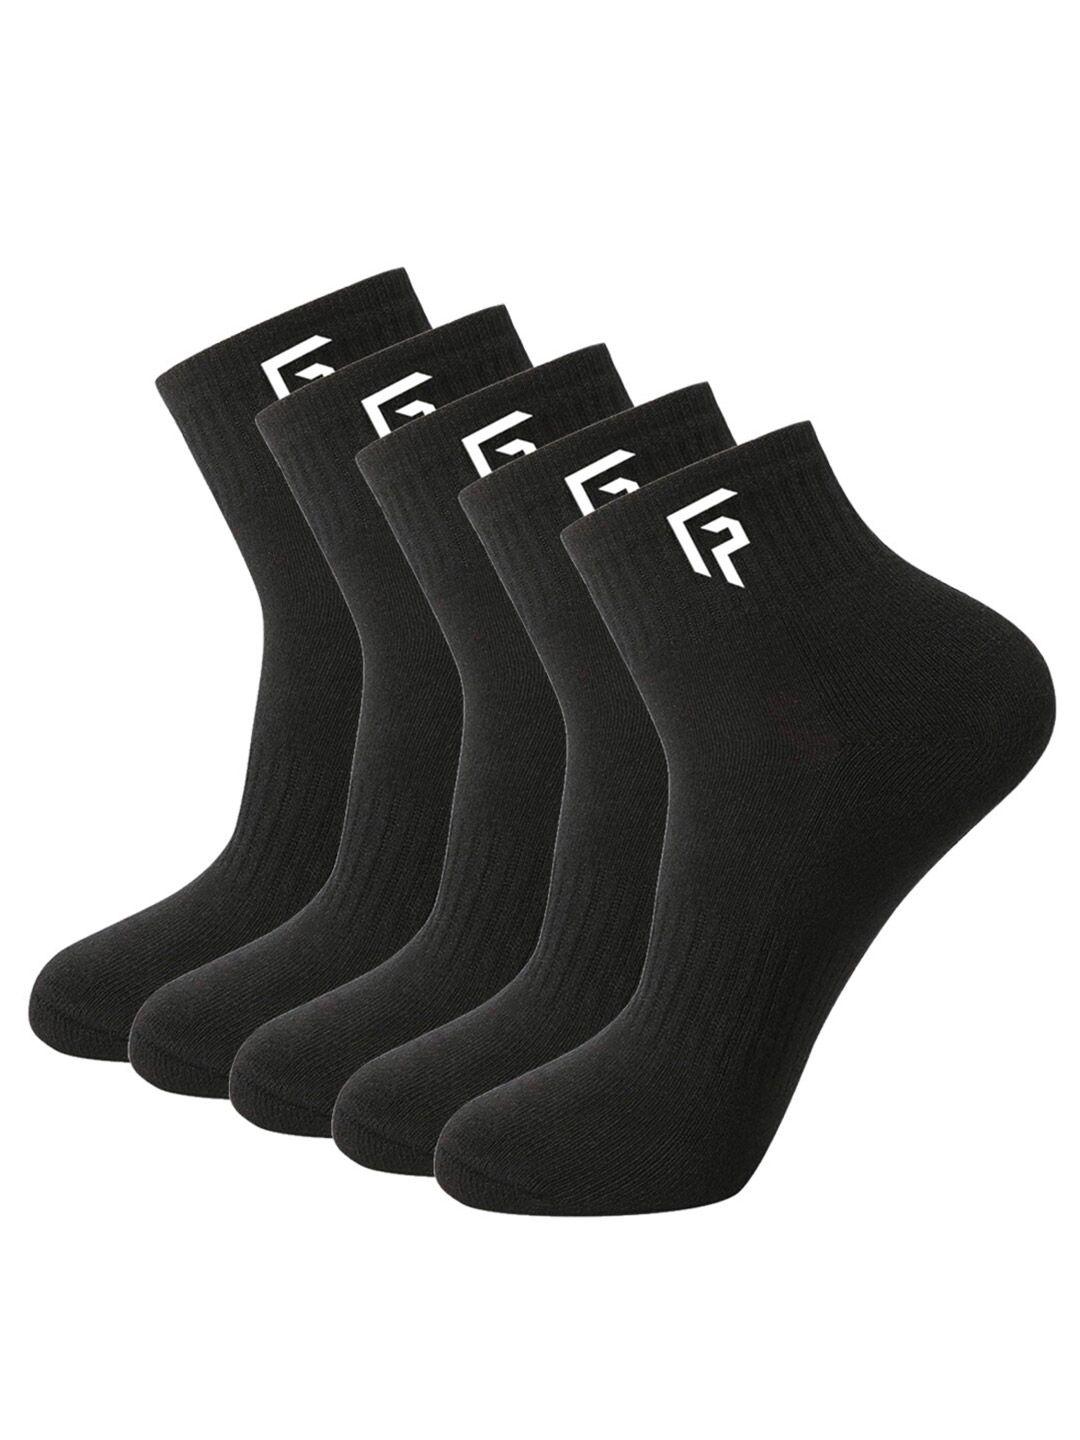 footprints pack of 5 black solid patterned cotton above ankle-length socks